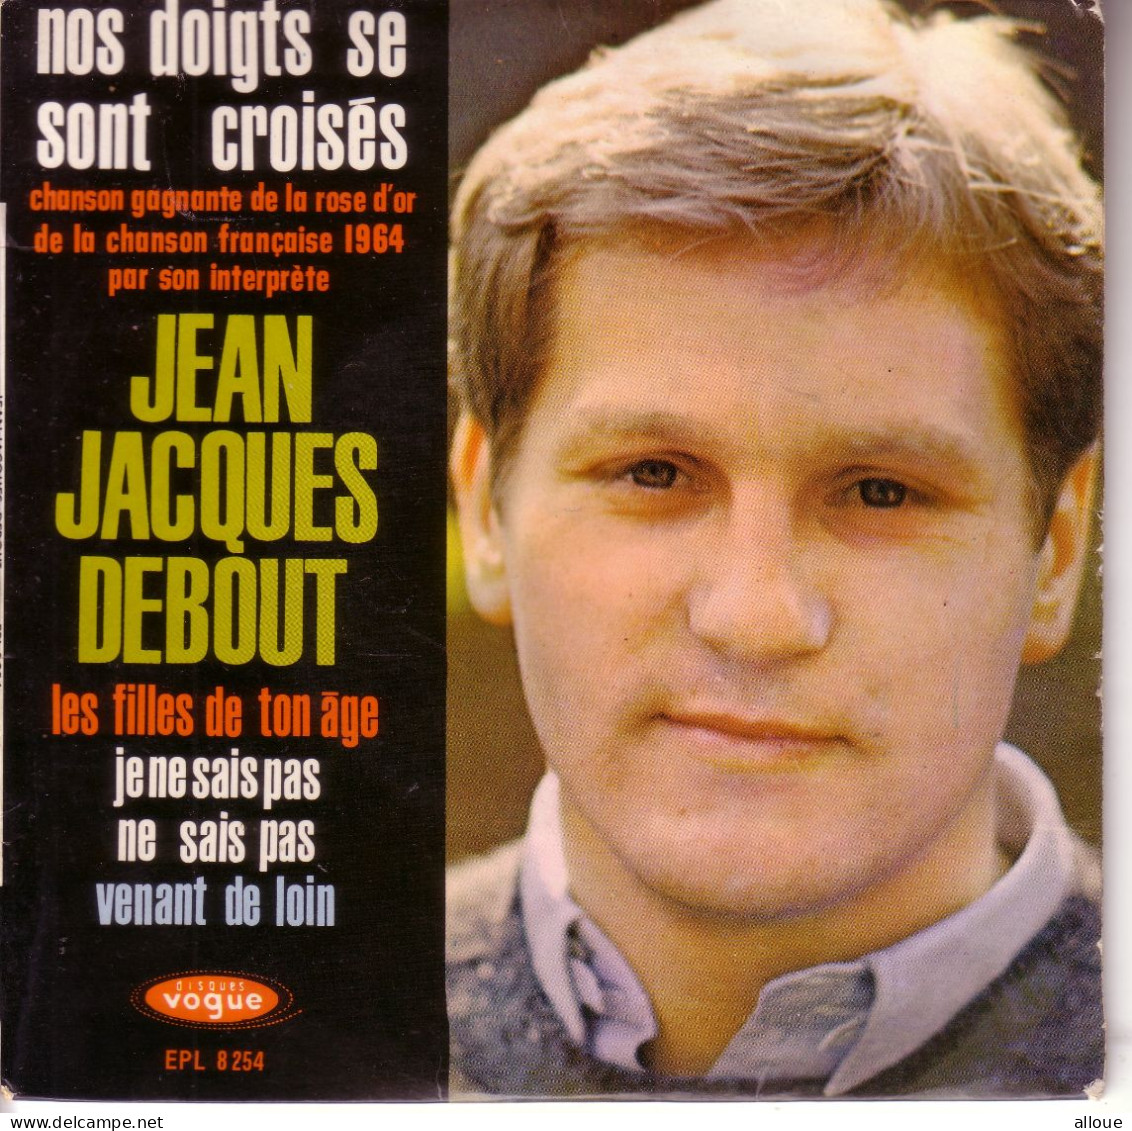 JEAN-JACQUES DEBOUT - FR EP - NOS DOIGTS SE SONT CROISES + 3 - Other - French Music